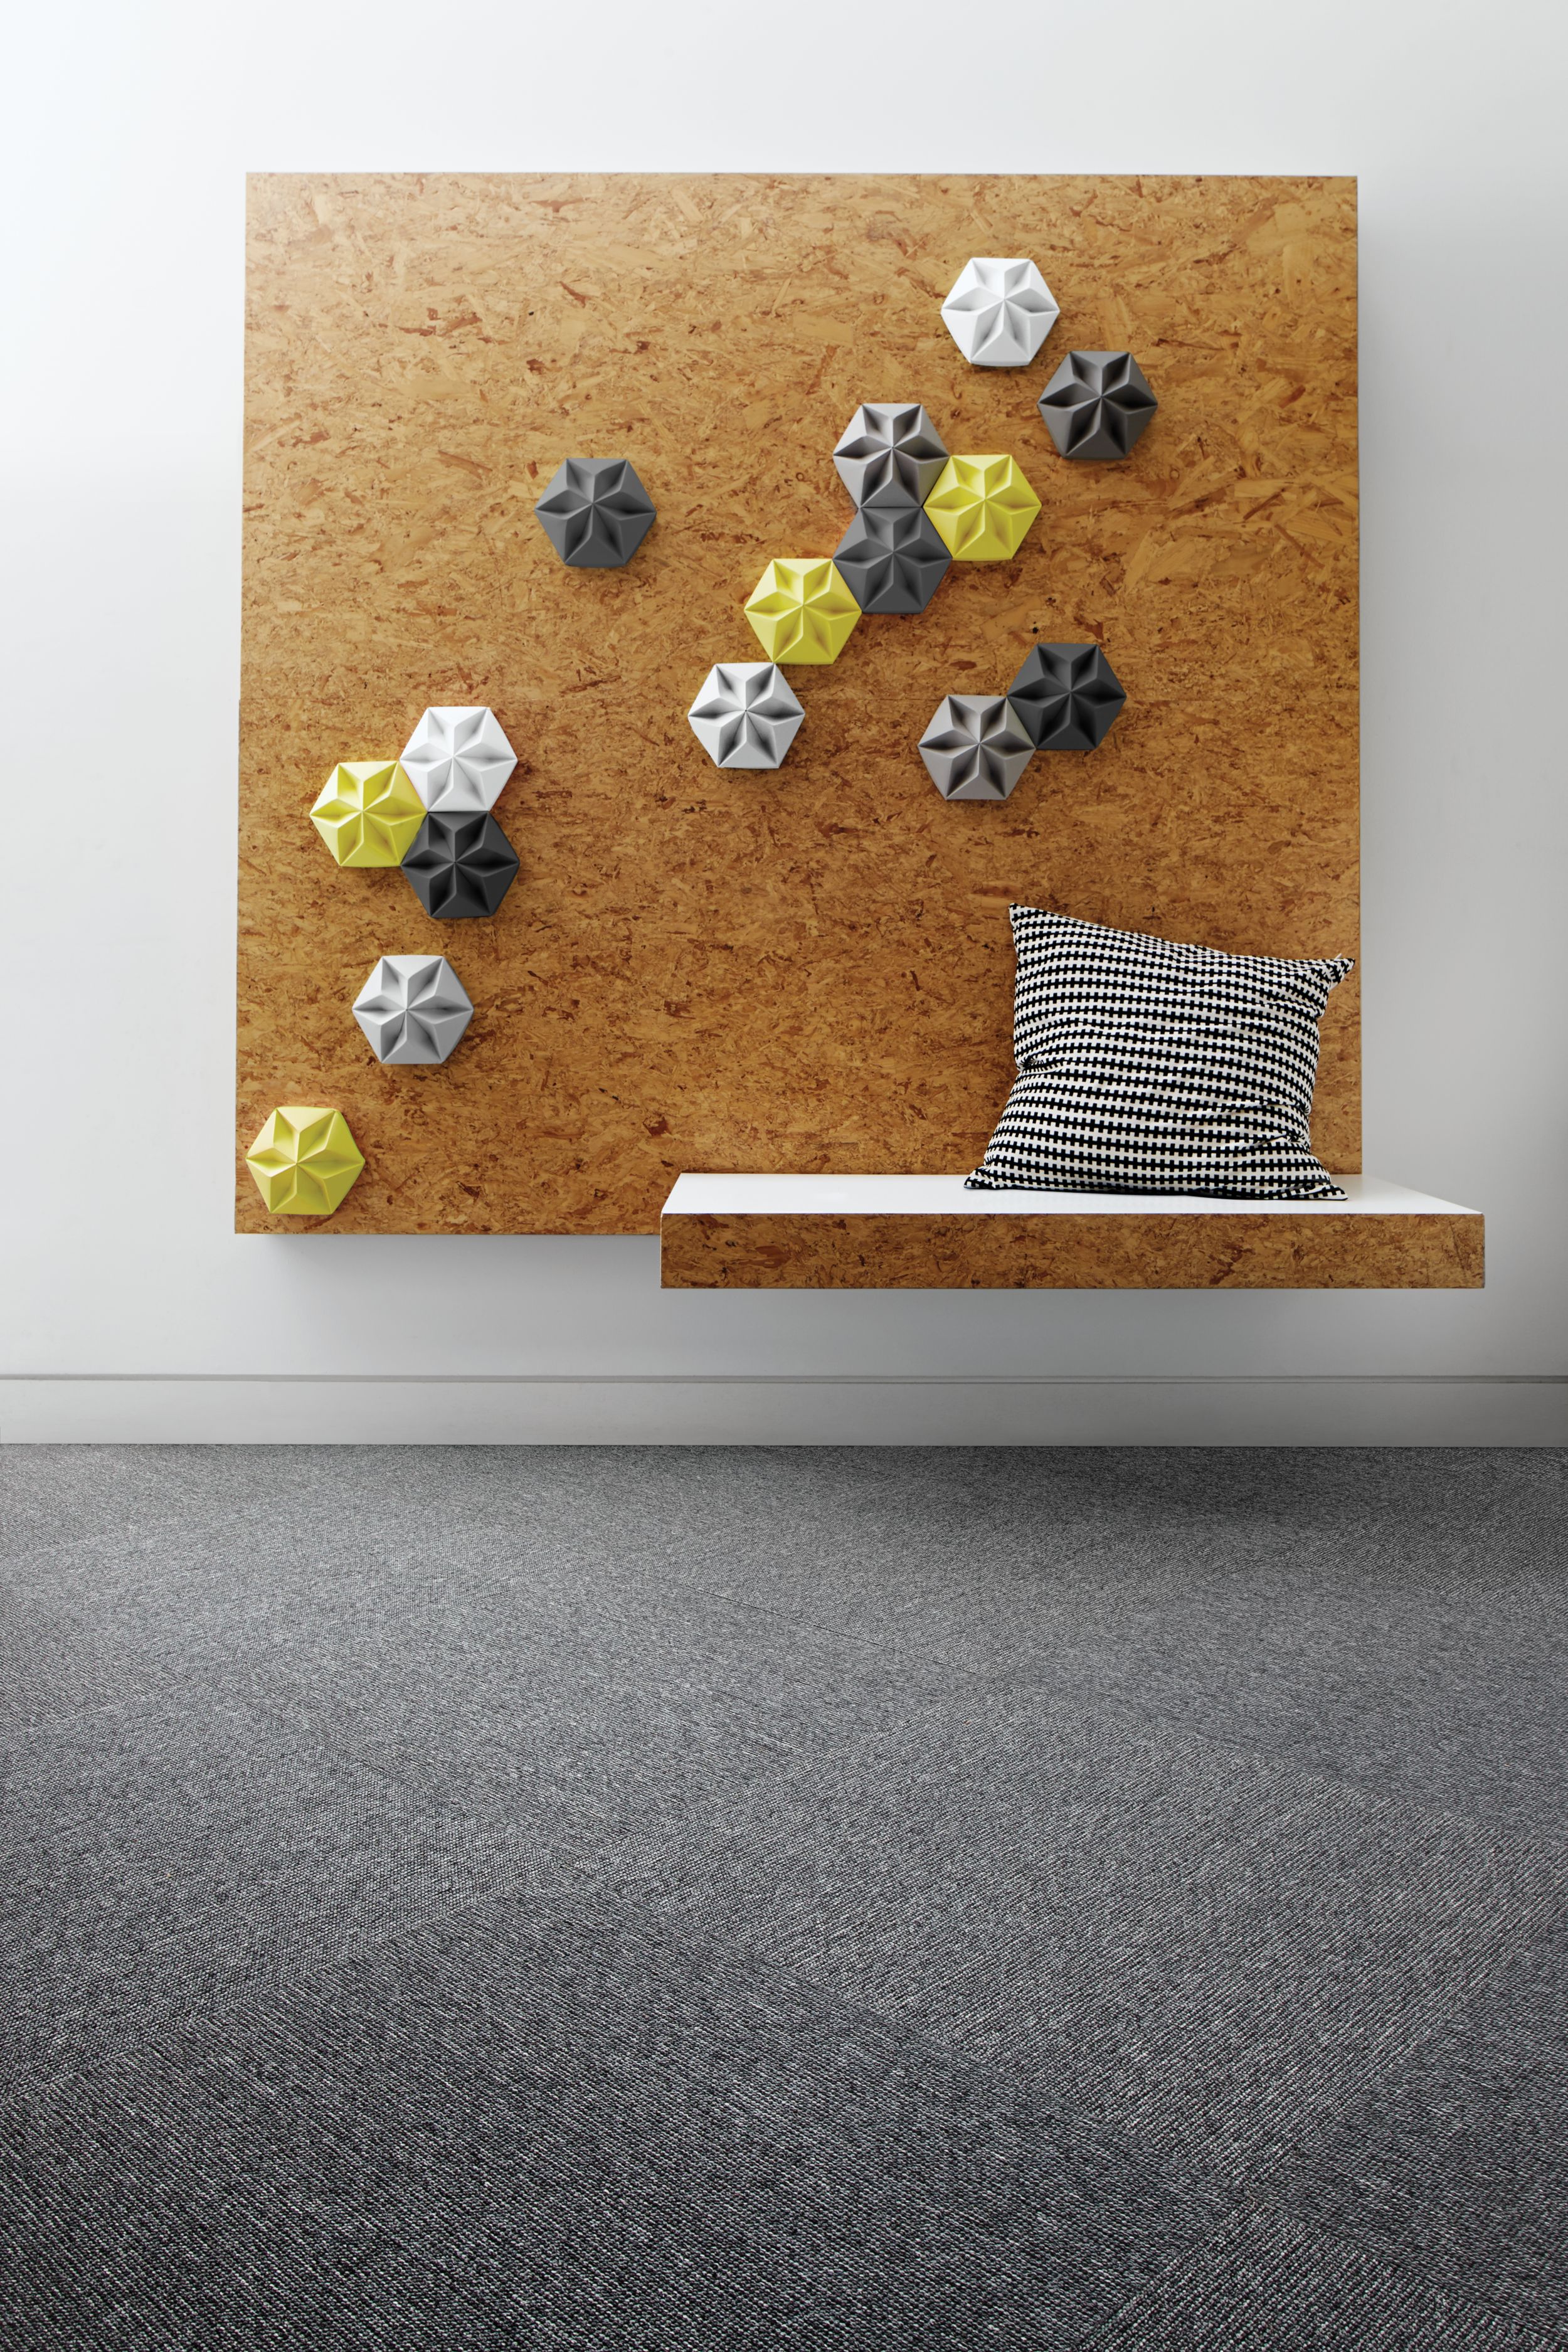  Interface Scandinavian carpet tile in room with suspended shelf and art installation número de imagen 1